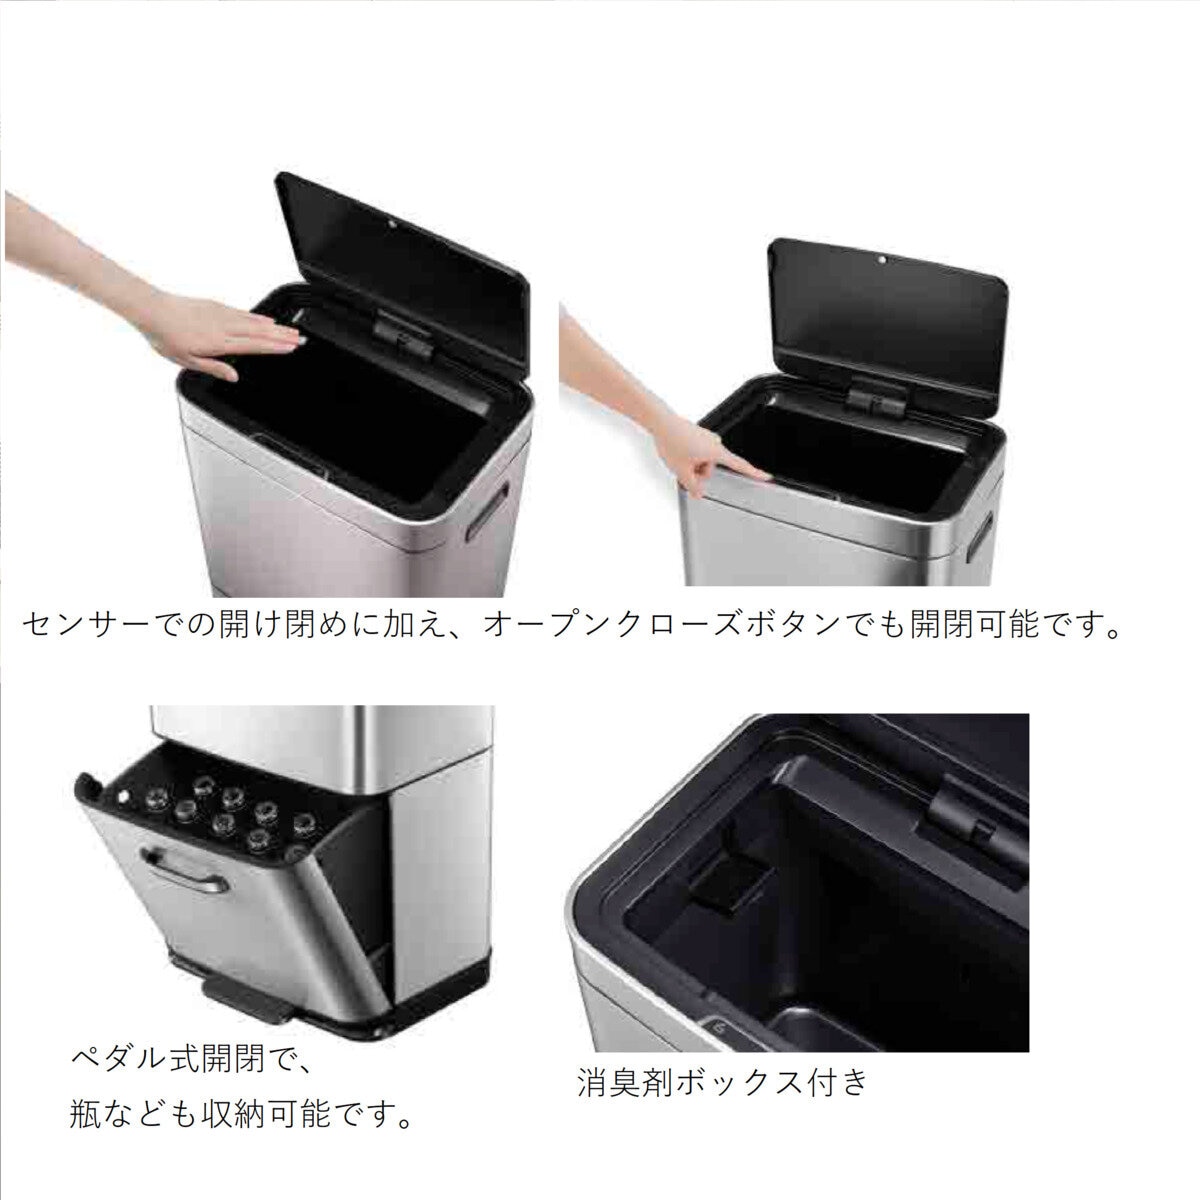 Sensible Eco Living センサーゴミ箱 35L+19L | Costco Japan